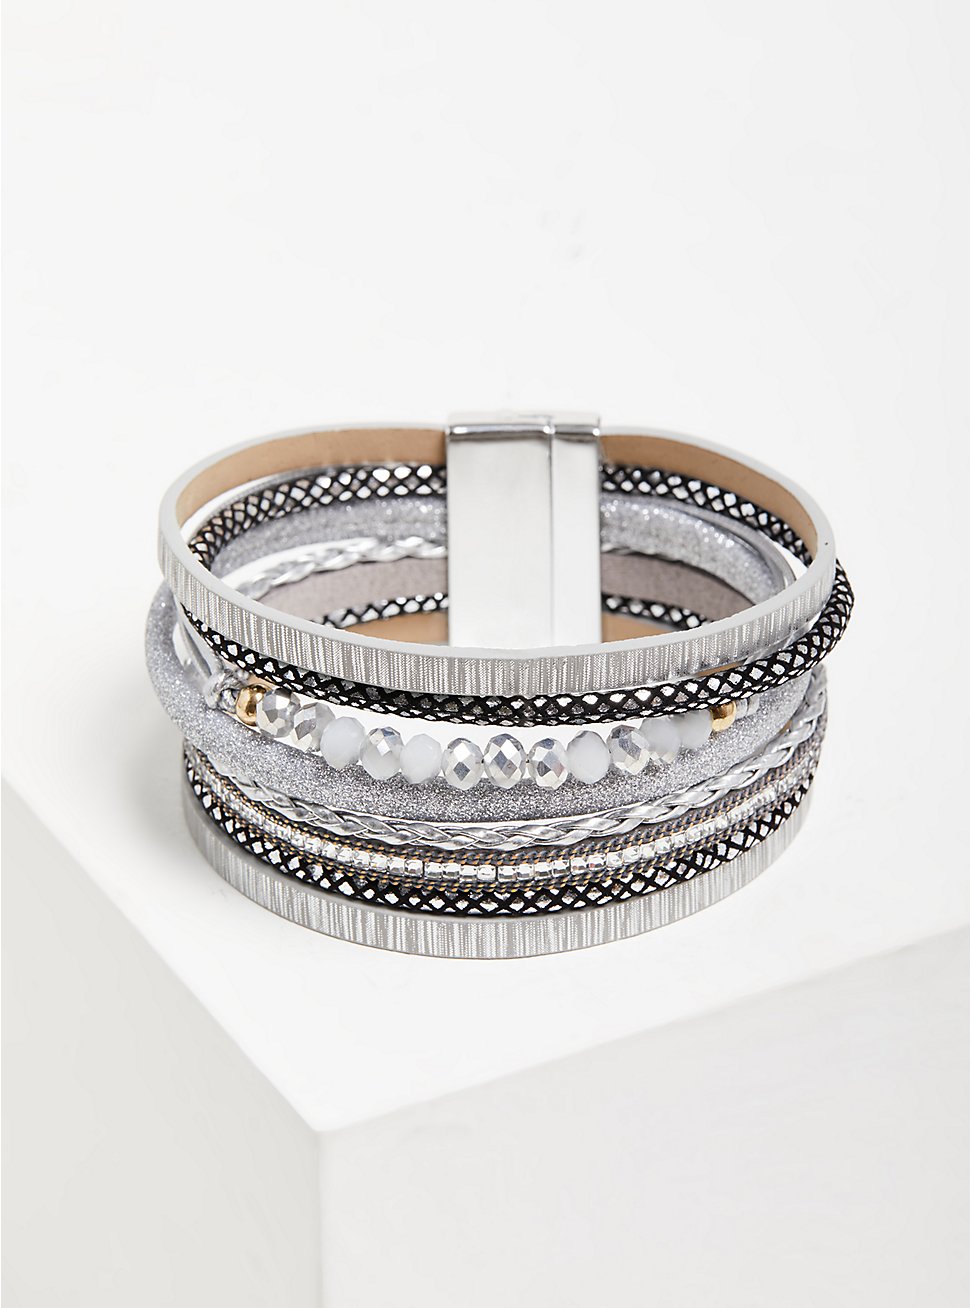 Plus Size Magnetic Bracelet - Grey & Silver Tone, SILVER, hi-res